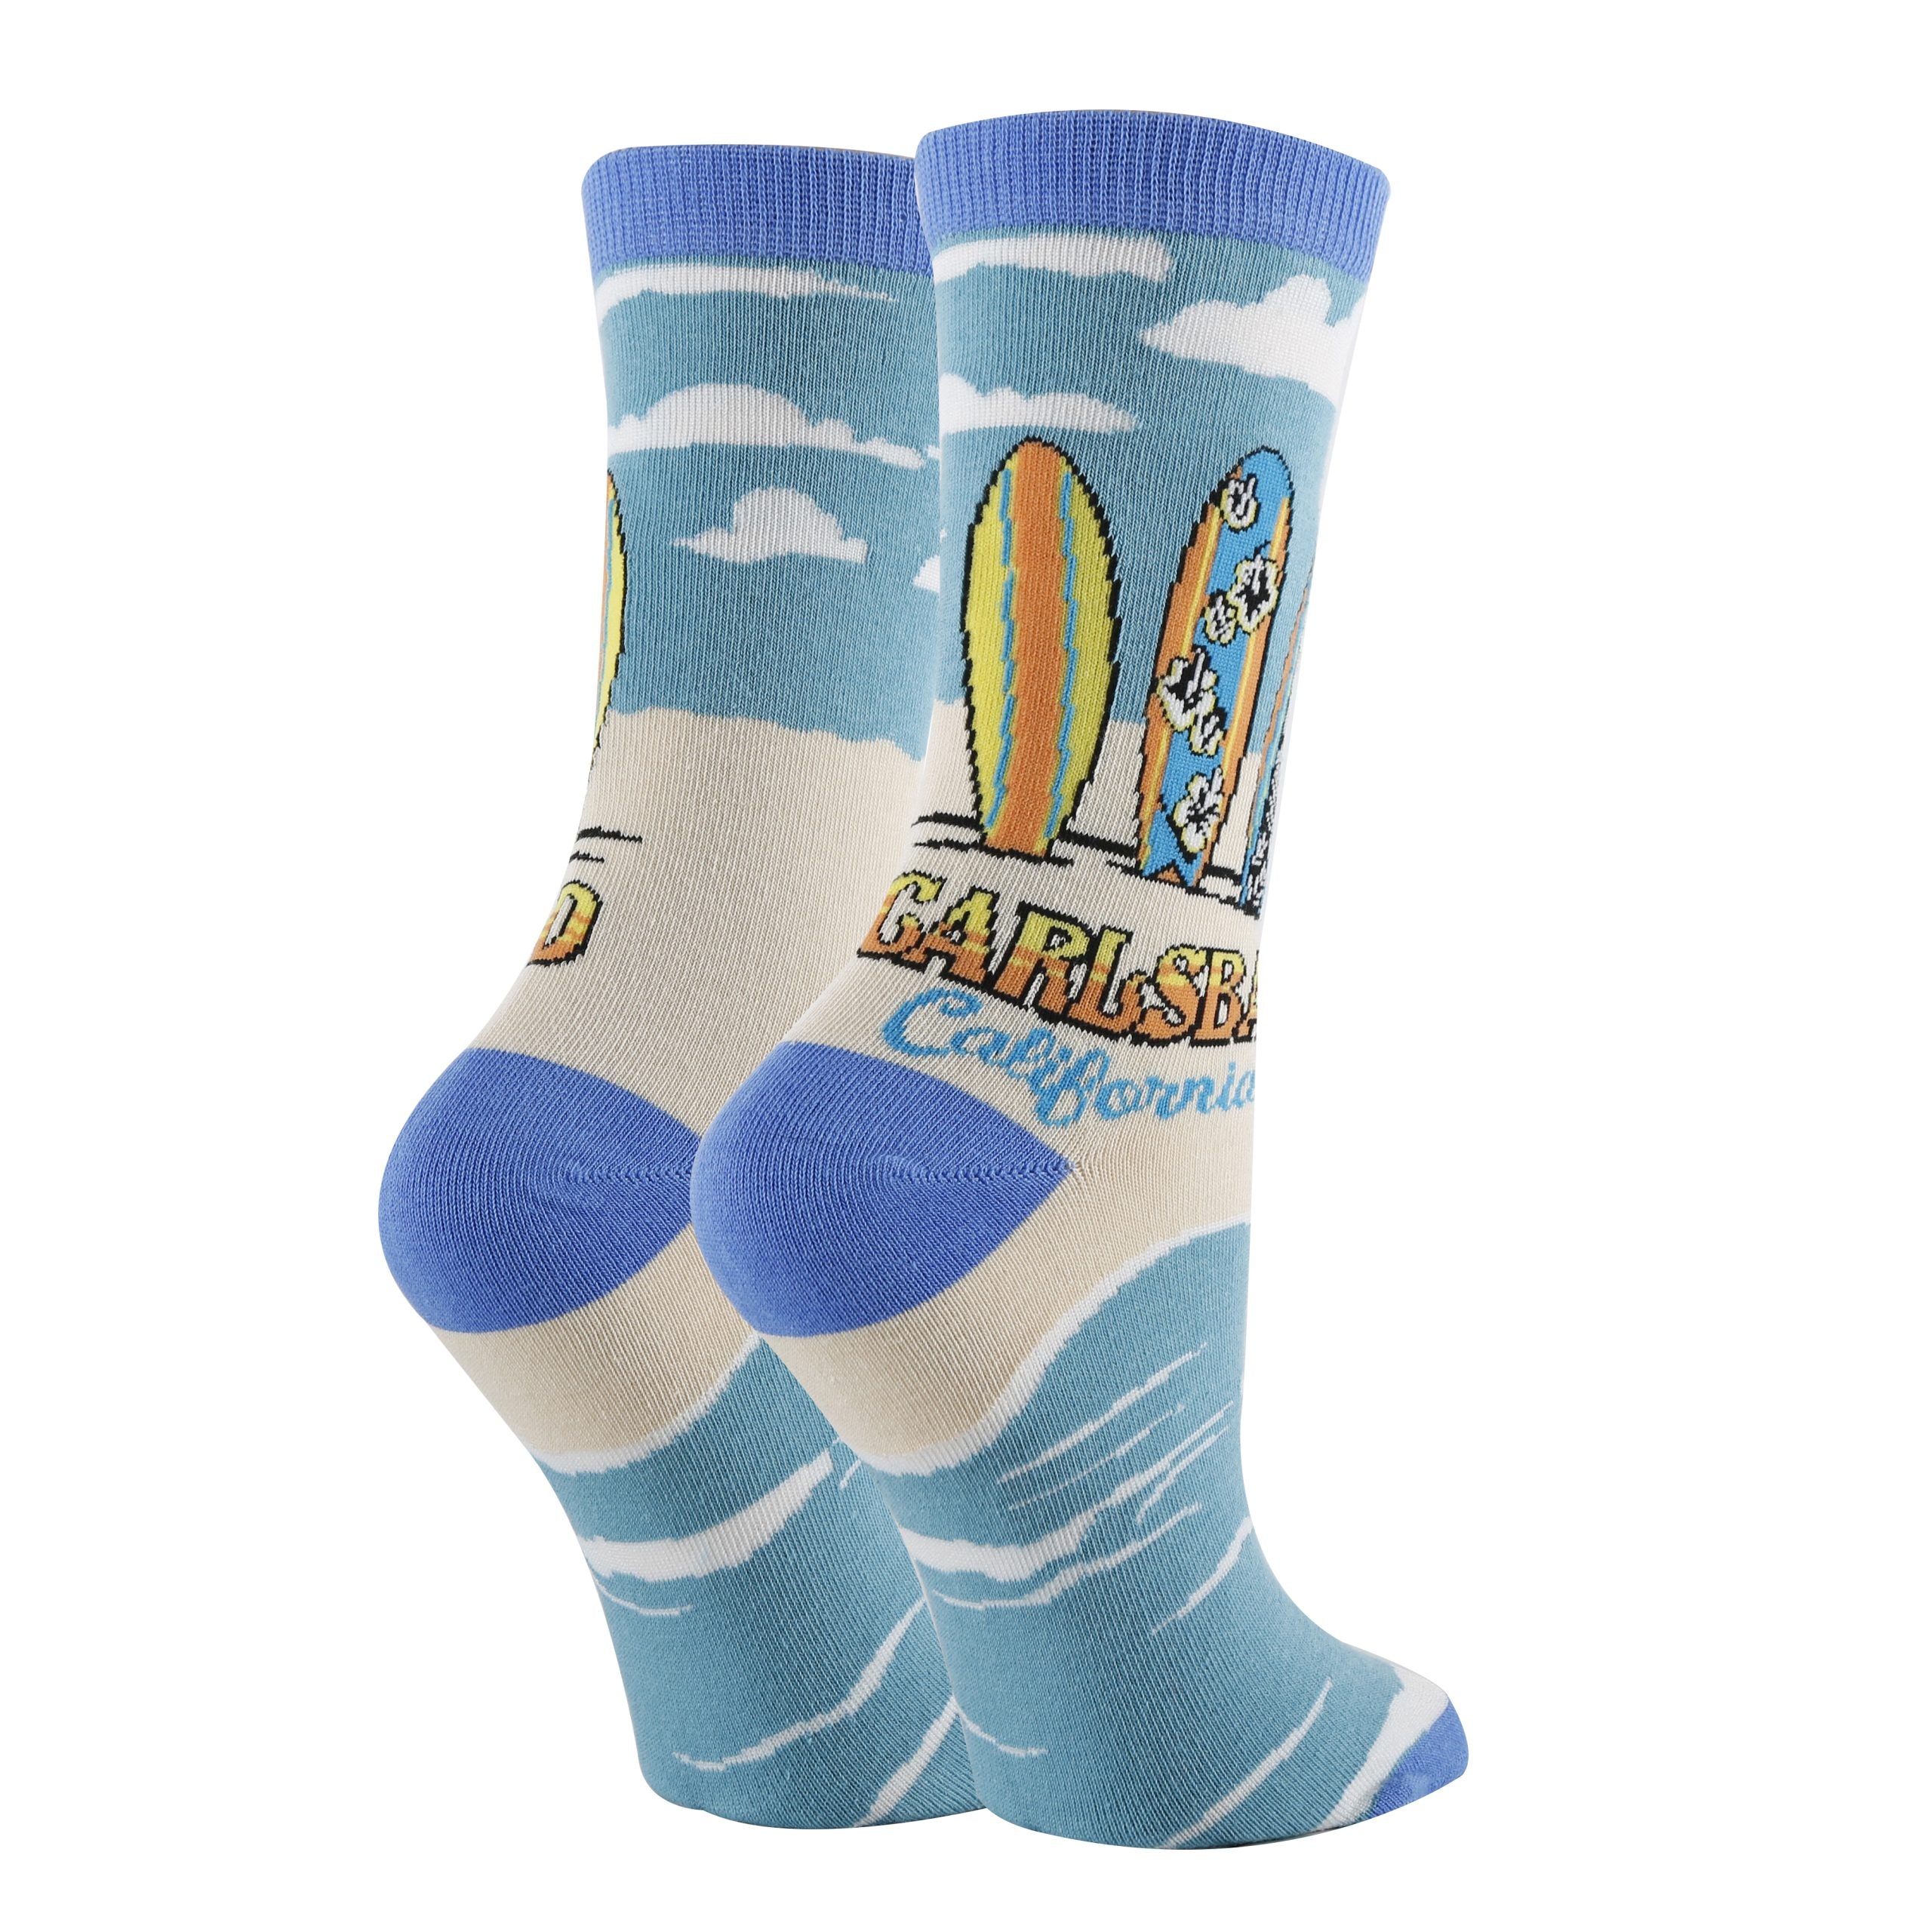 Calrsbad Socks